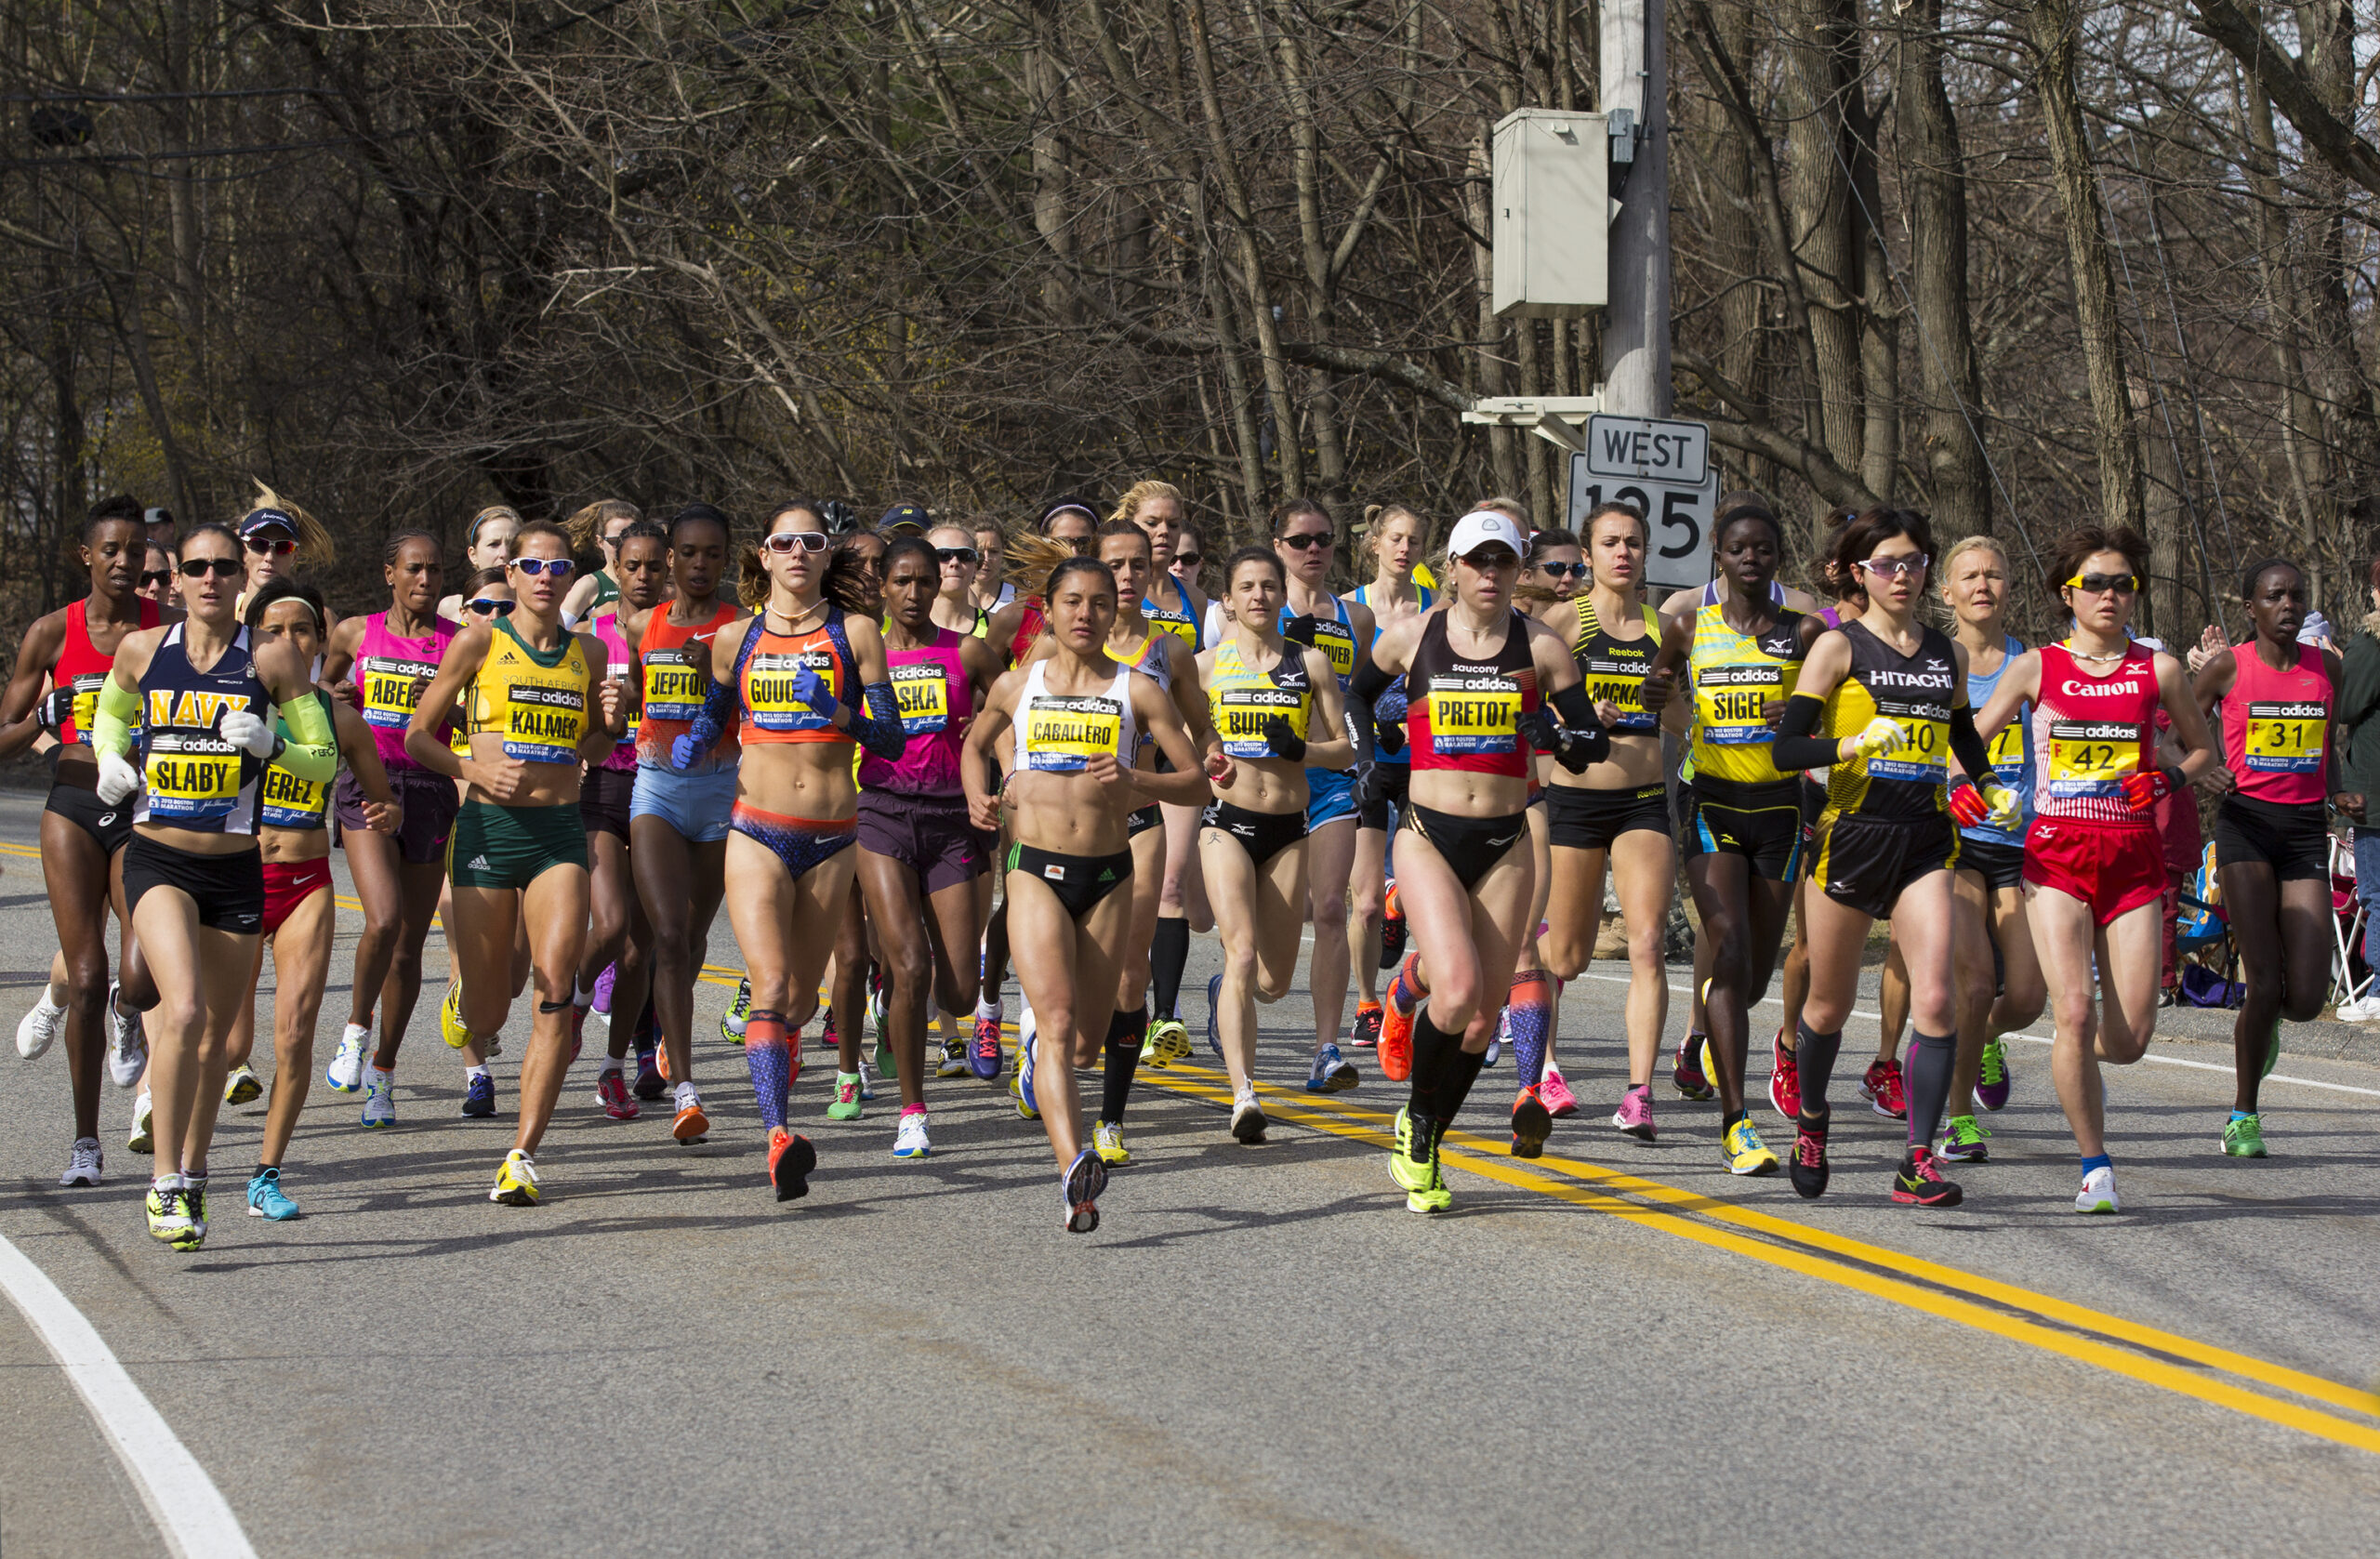 The Boston Marathon 2013 hosted 28,000 athletes from around the world. (Shutterstock.com)